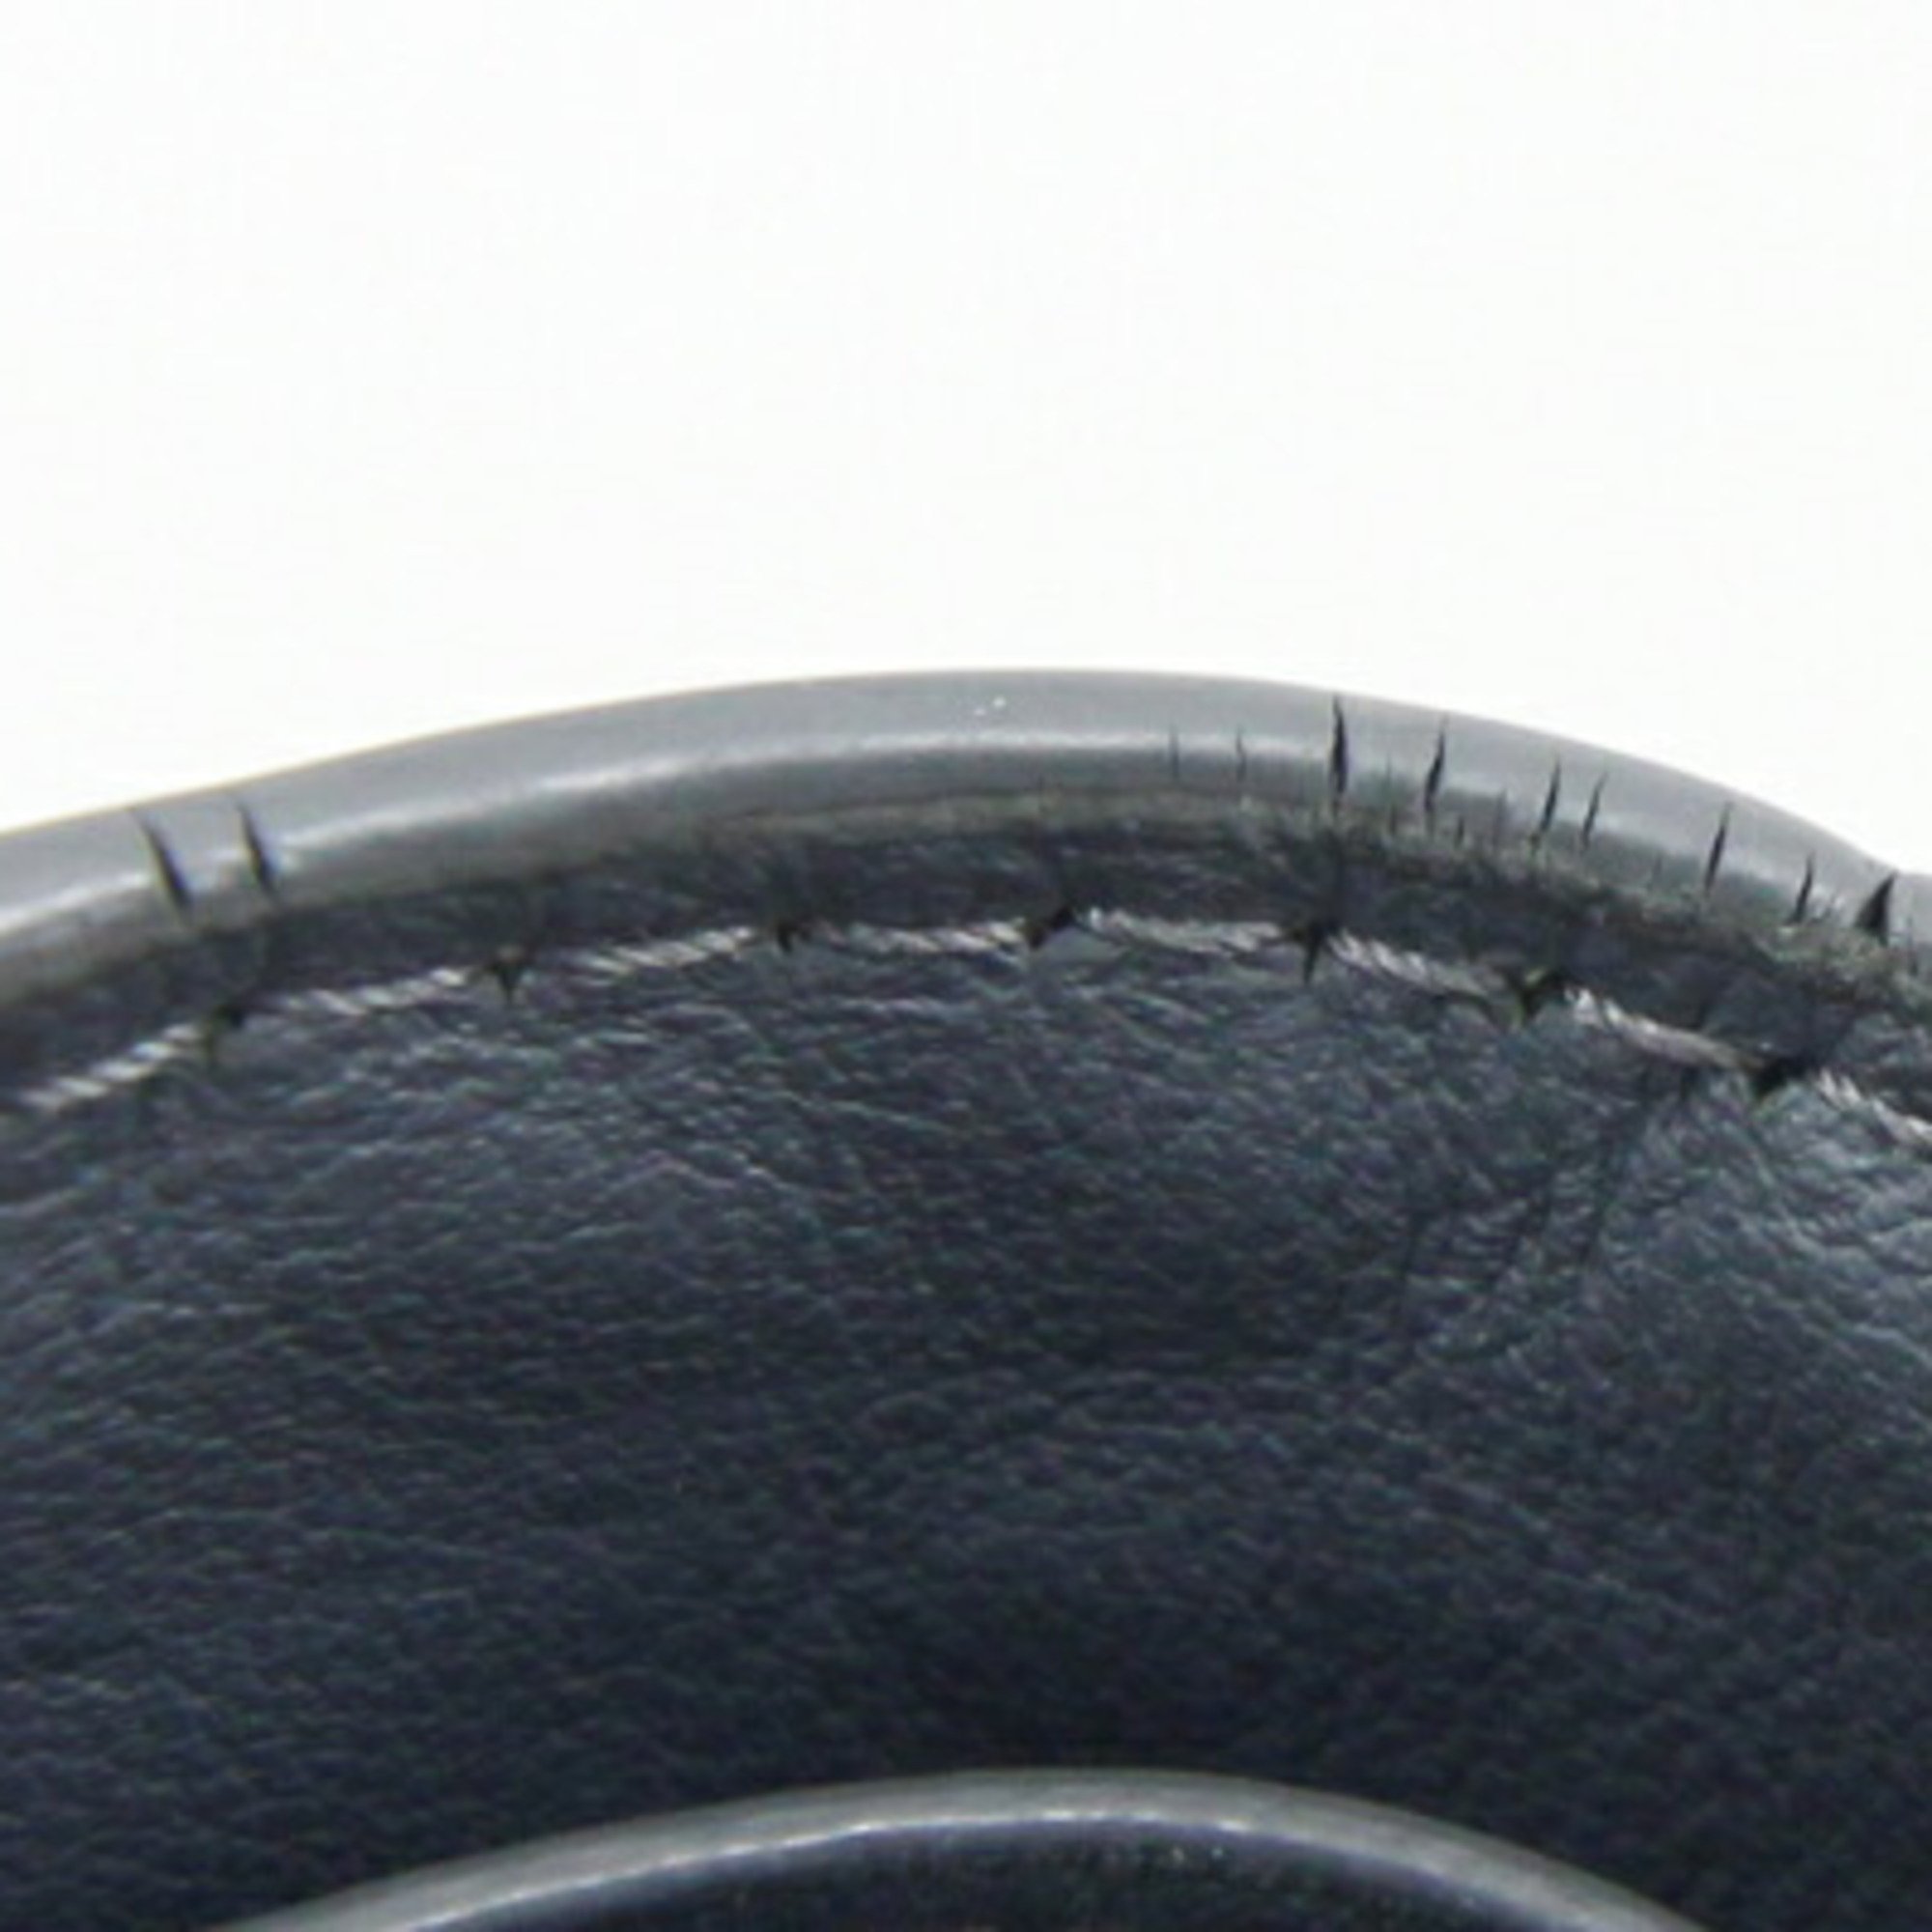 Bottega Veneta Bi-fold Wallet Intrecciato 605722 Grey Leather Compact Men's BOTTEGA VENETA